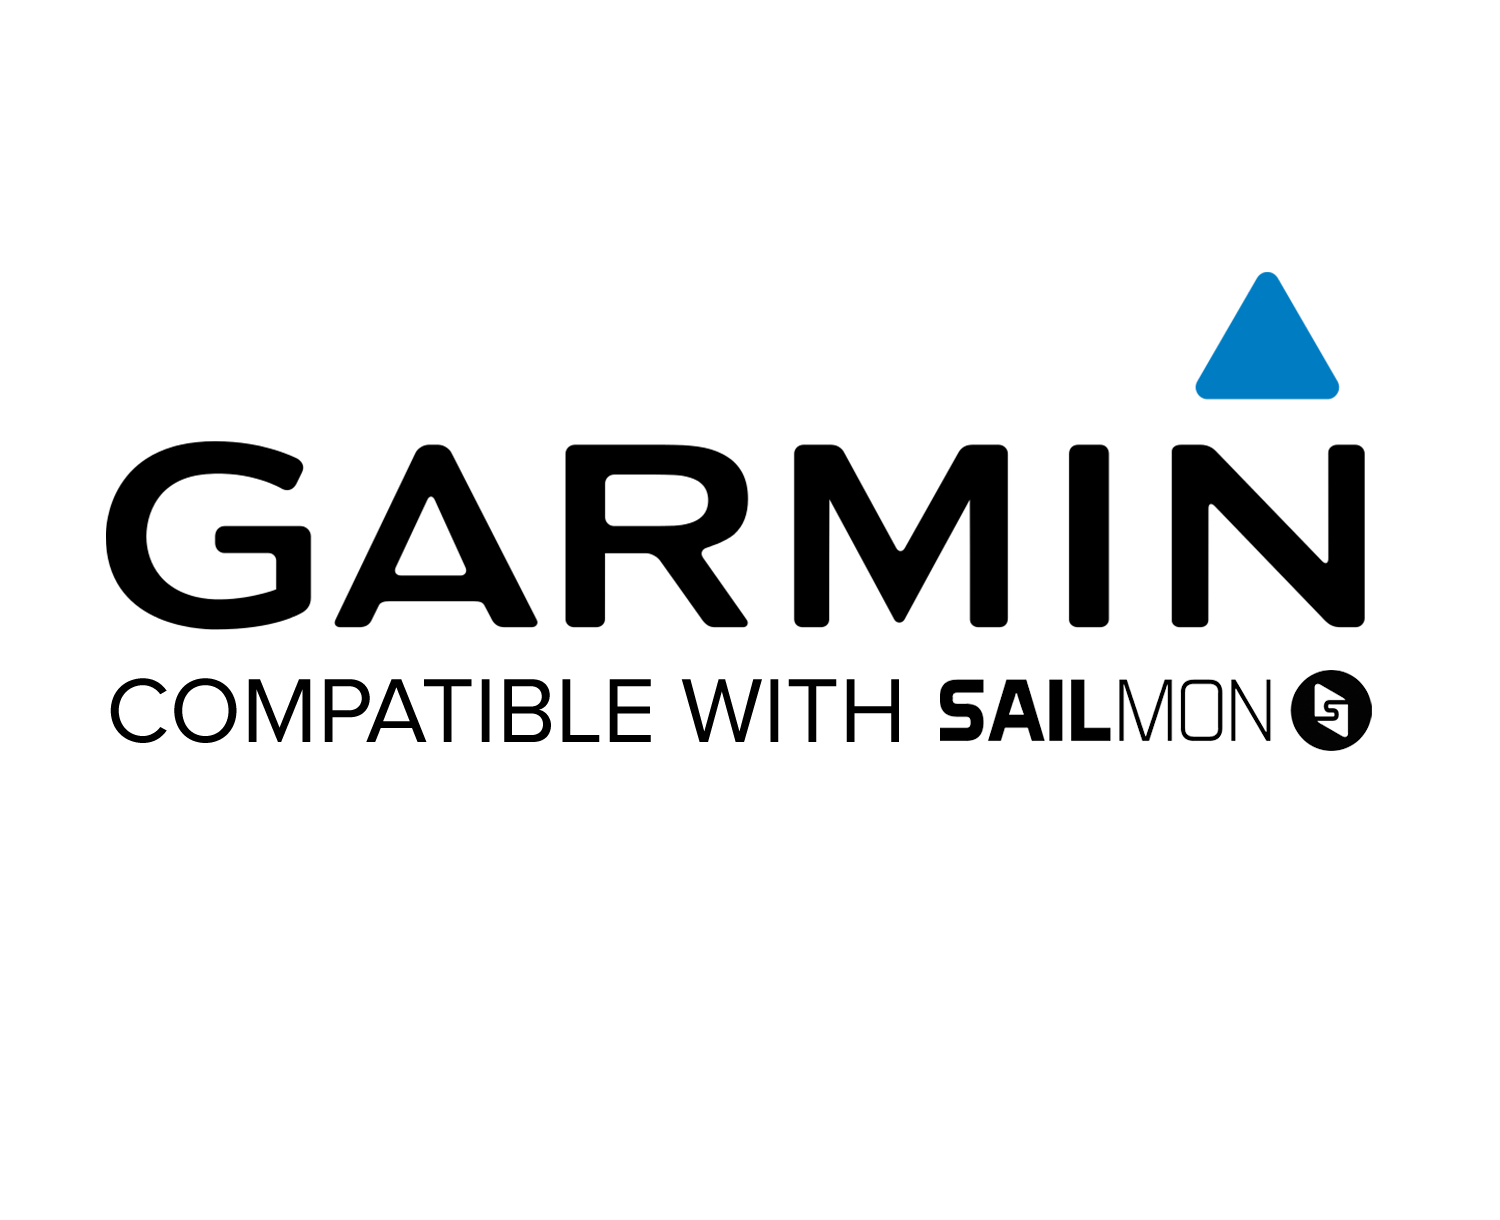 Garmin Logo - Pluspng